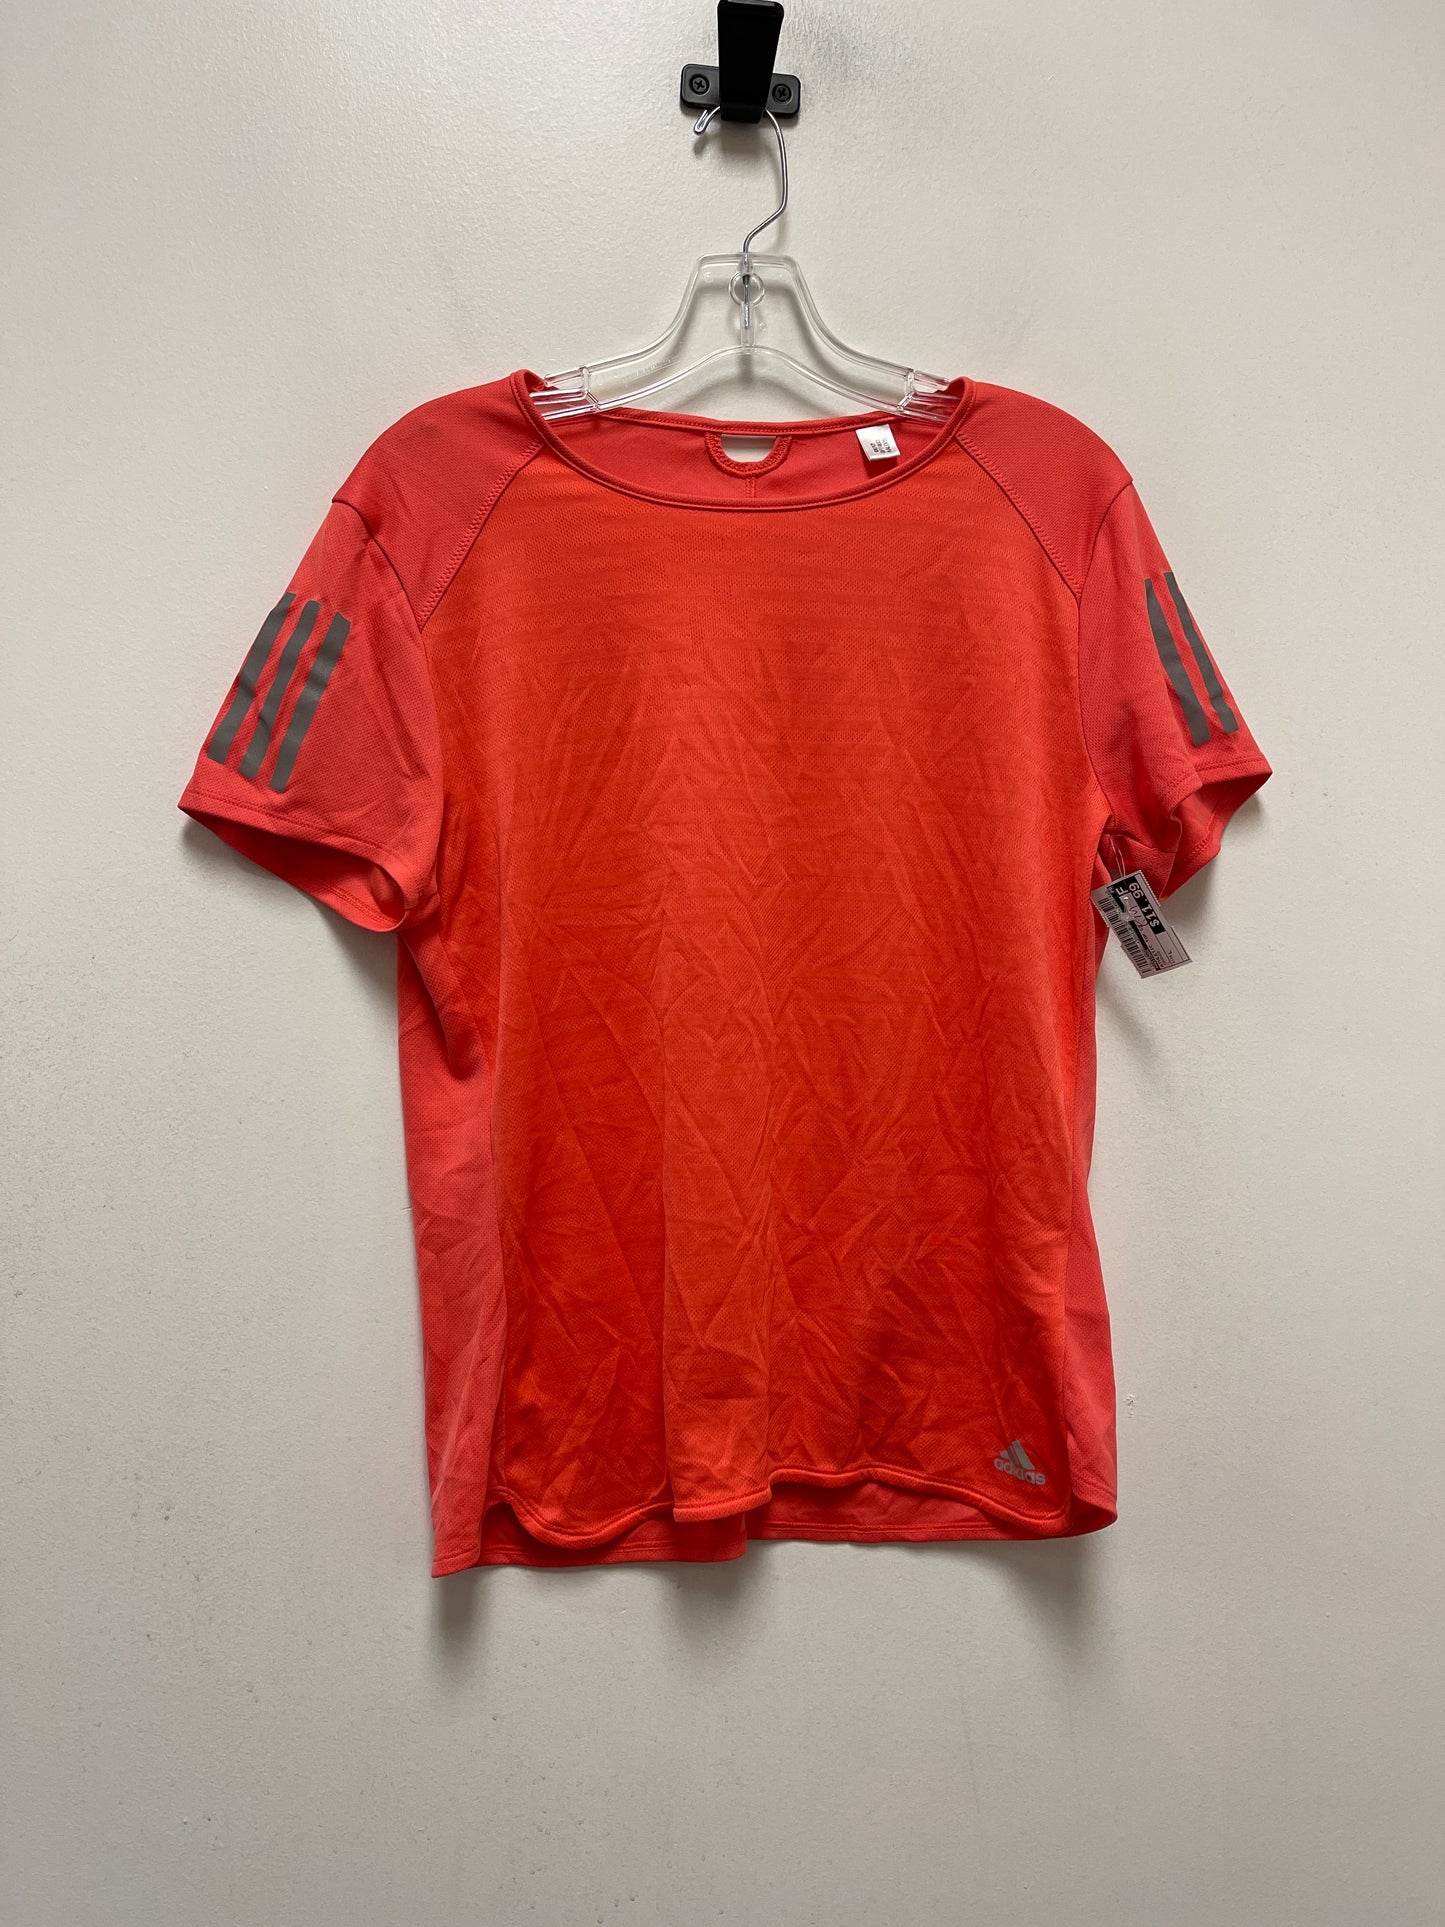 Orange Athletic Top Short Sleeve Adidas, Size L